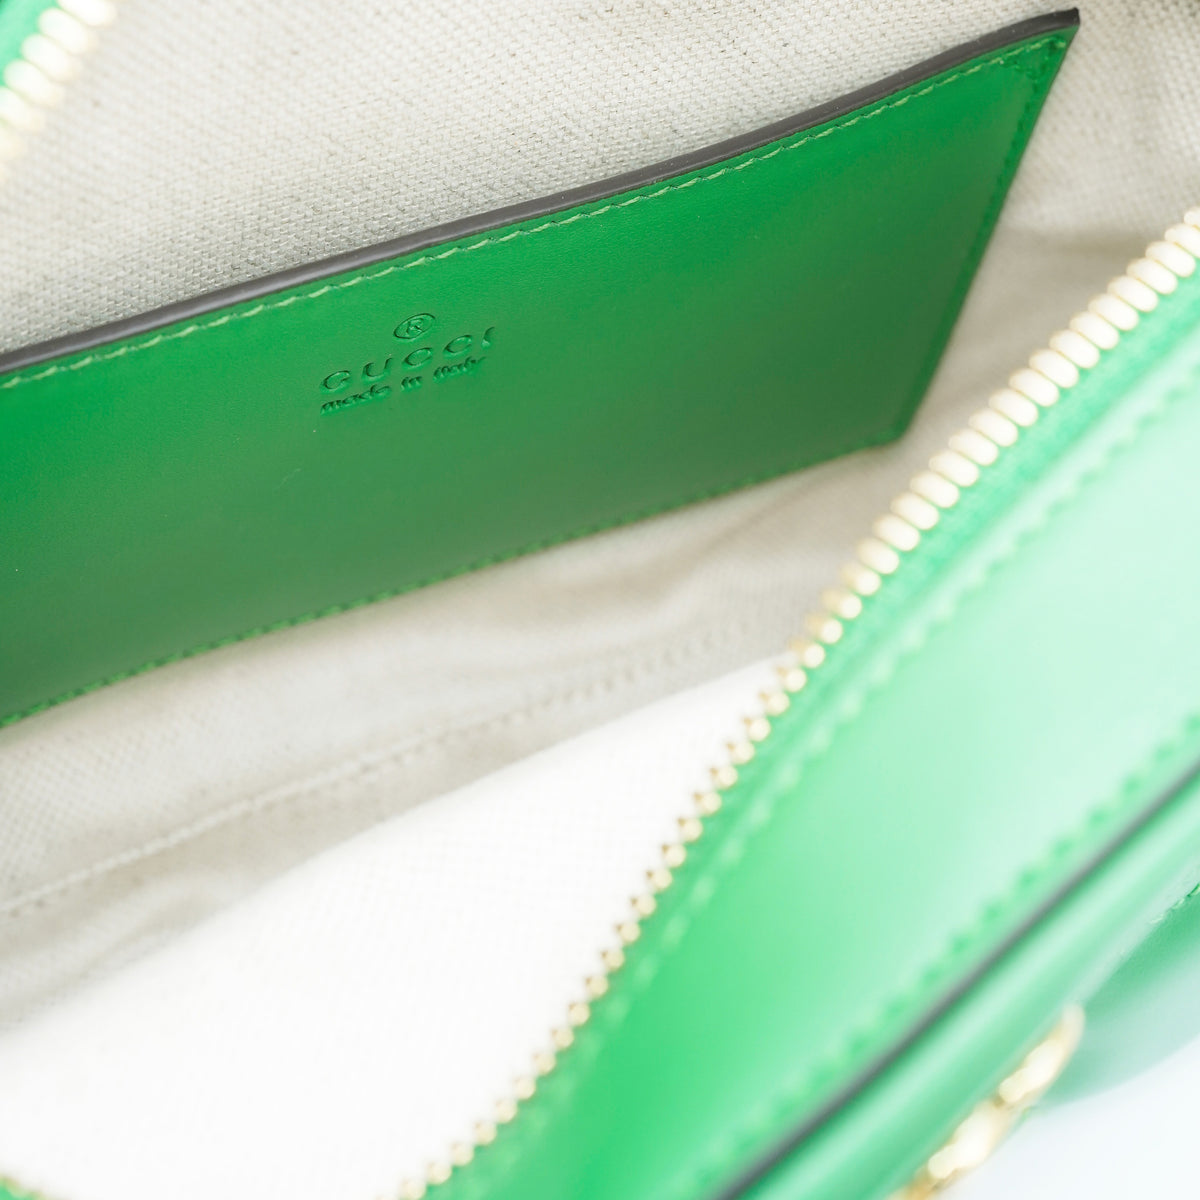 Gucci Green Leather Small GG Matelasse Camera Bag